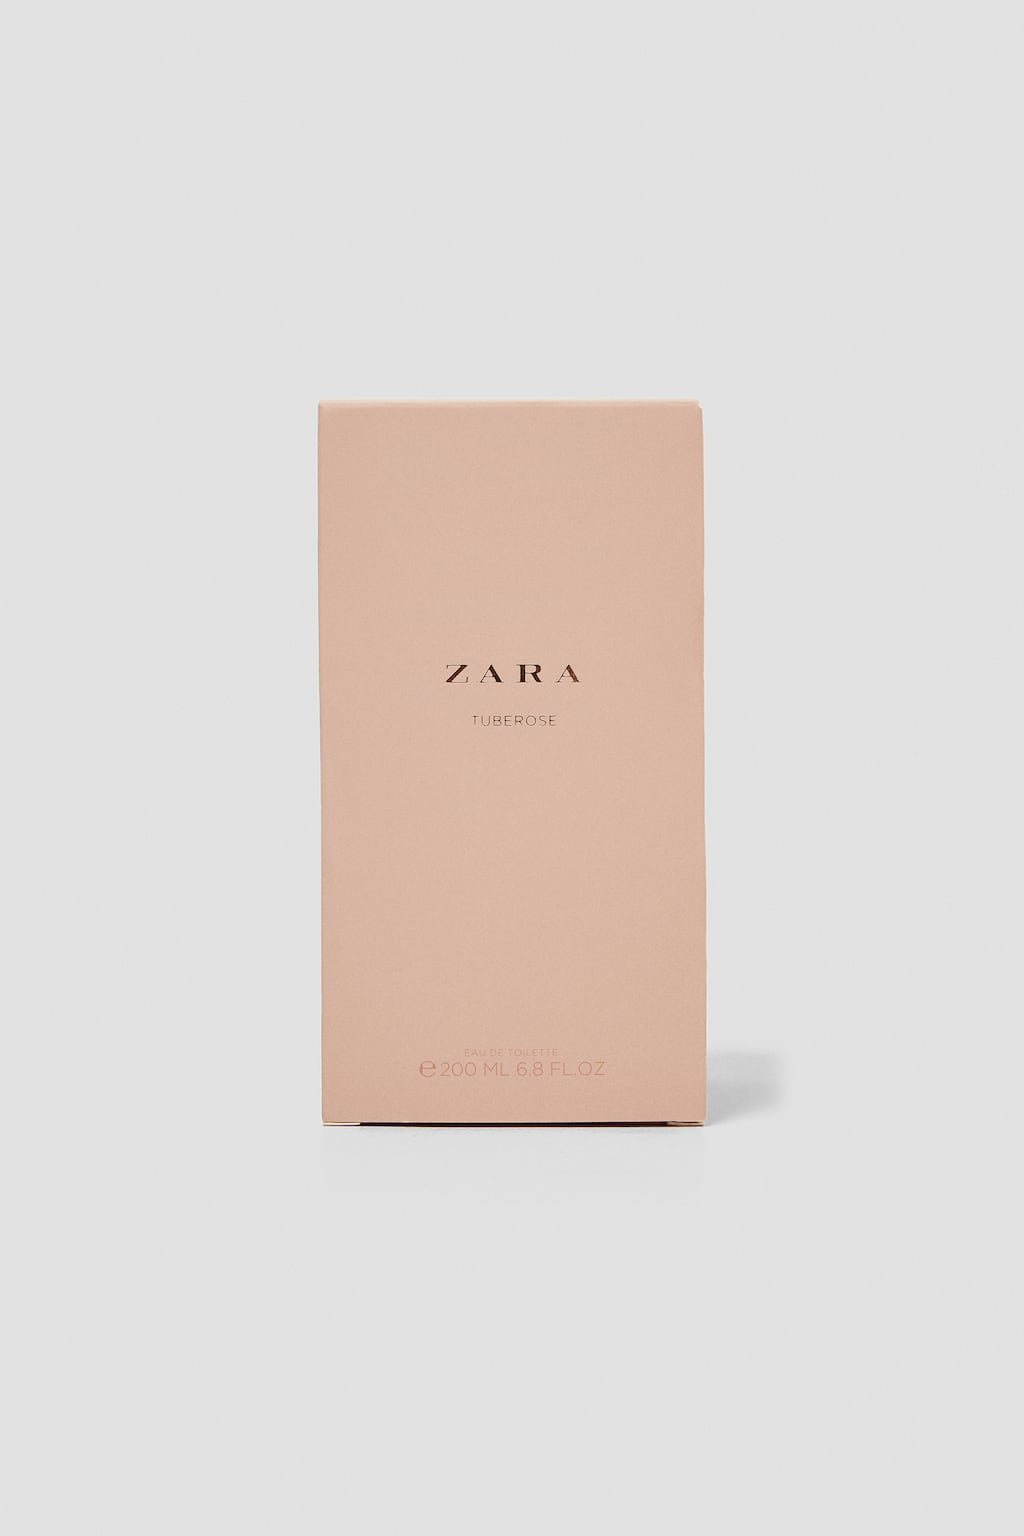 ÎÎ¹ÎºÏÎ½Î± 3 ÏÎ¿Ï TUBEROSE 200 ml Î±ÏÏ Zara